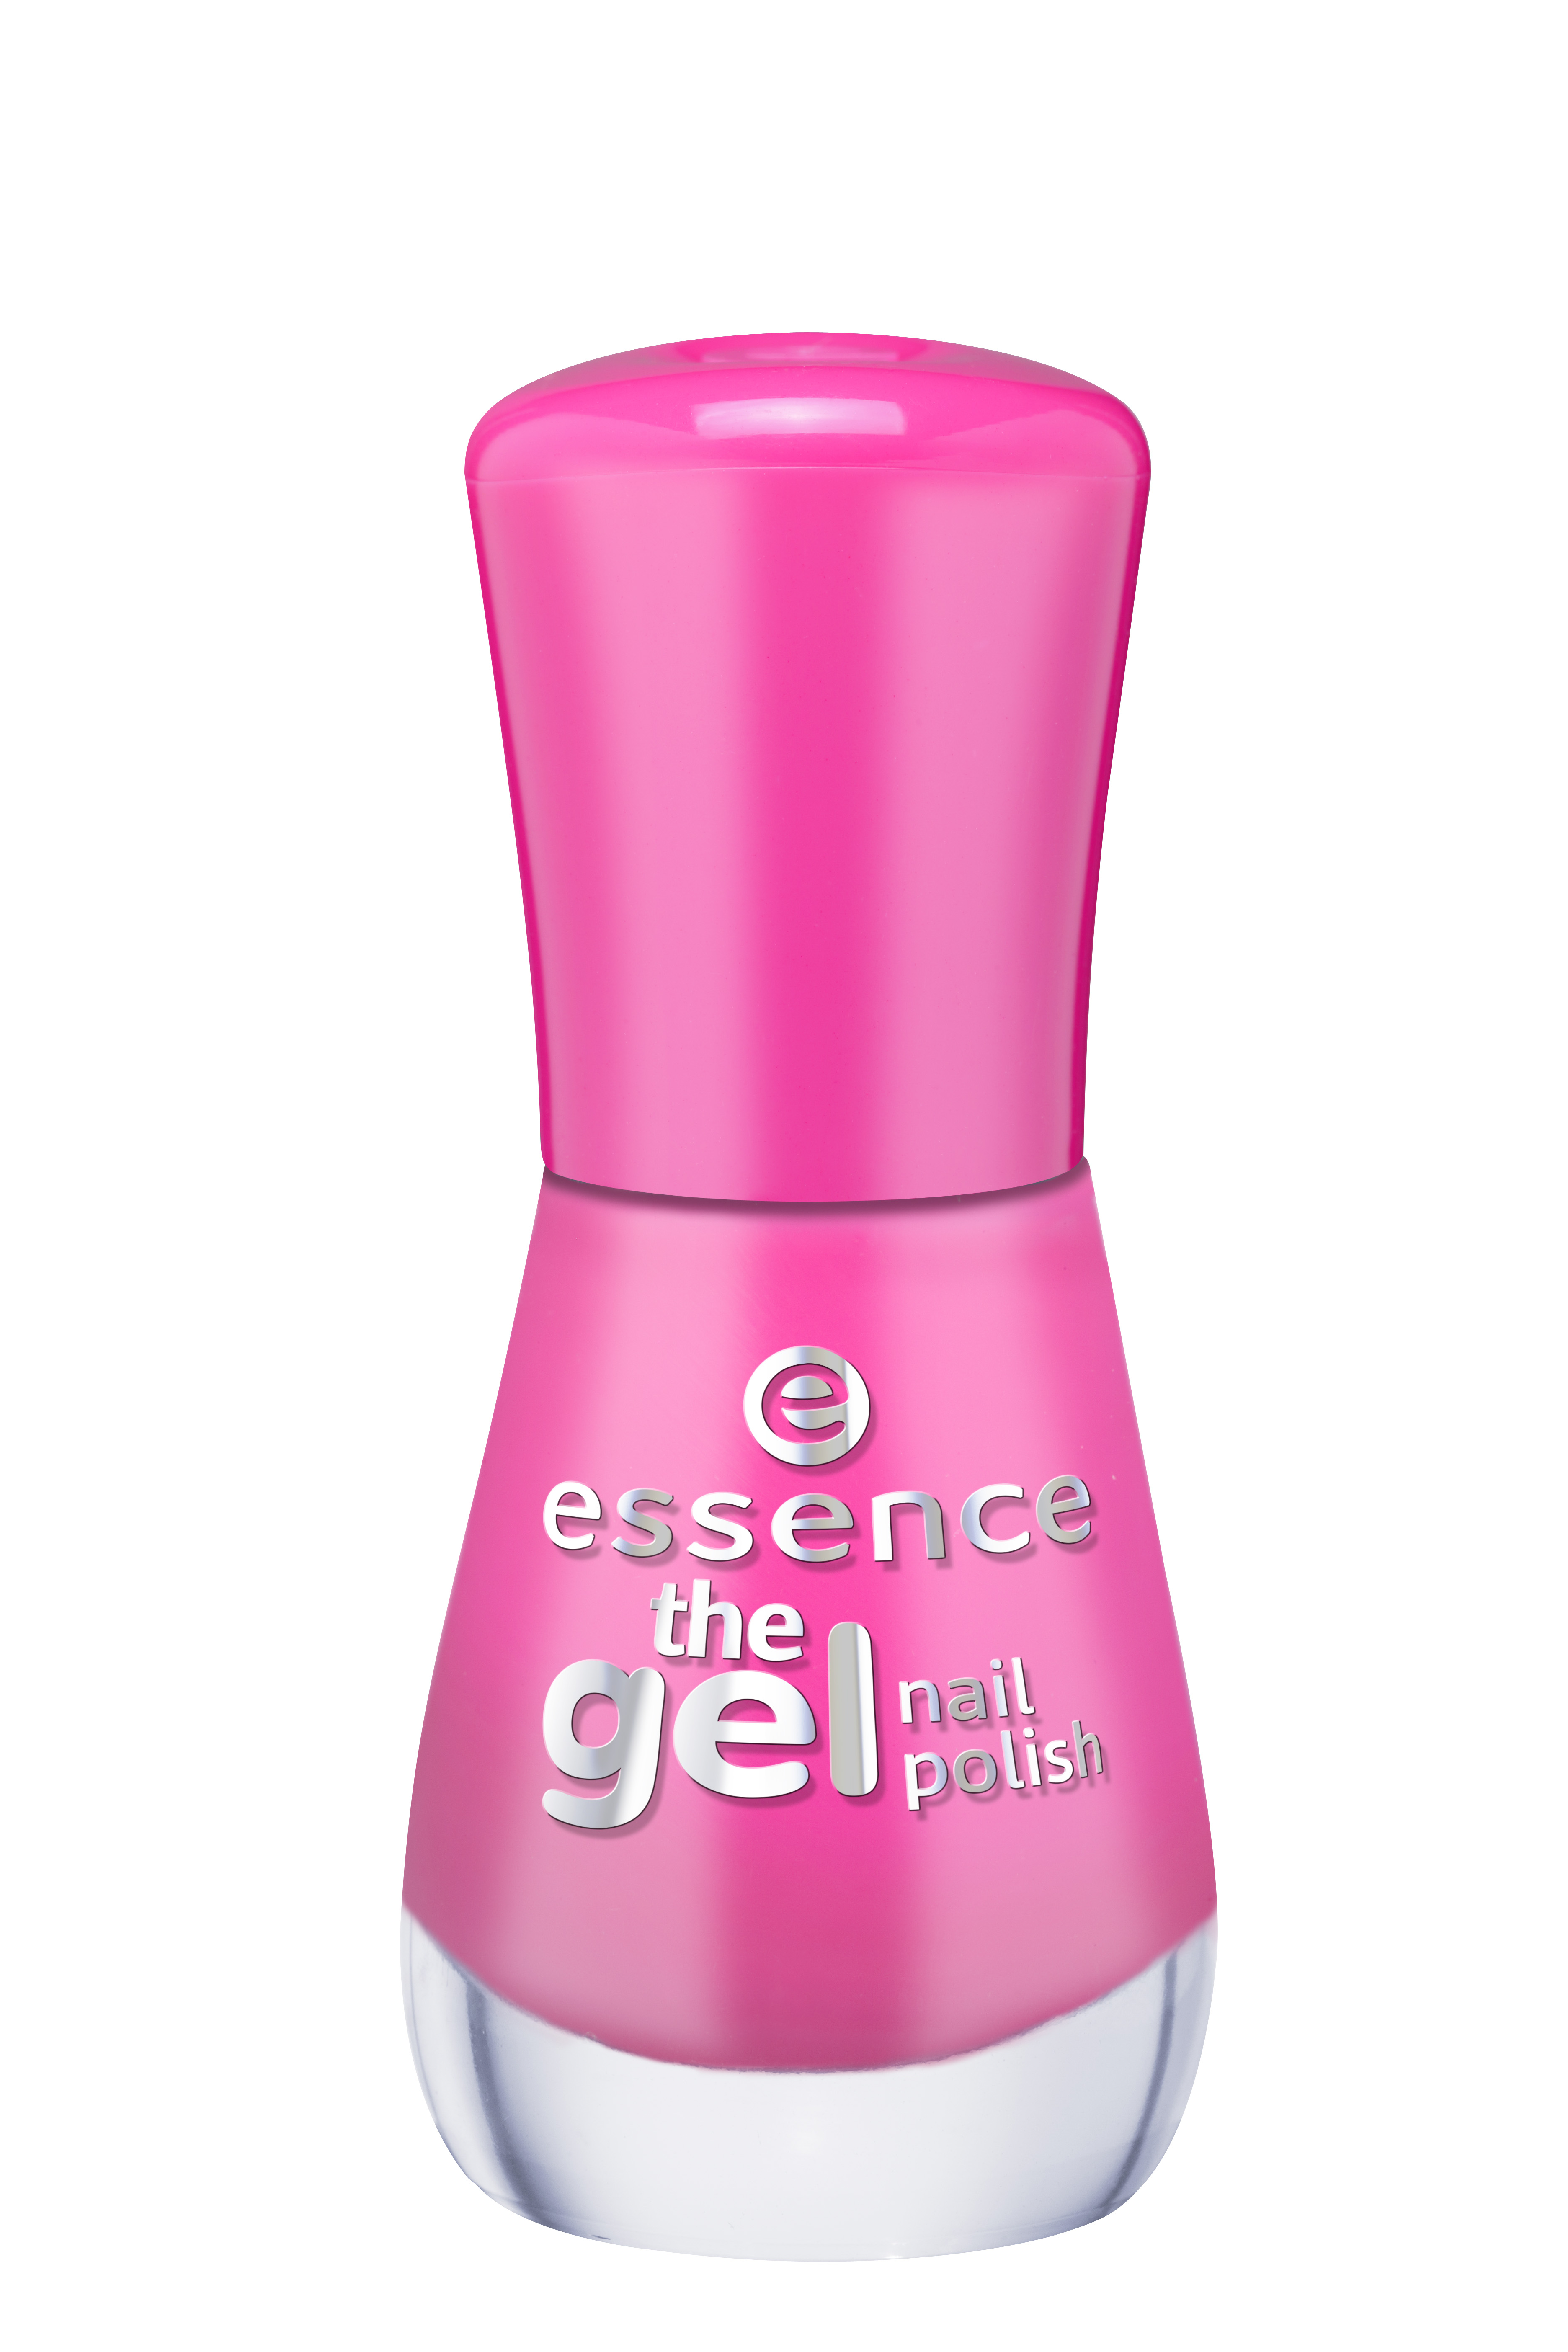 essence the gel nail polish 09 - เอสเซนส์เดอะเจลเนลโพลิช 09